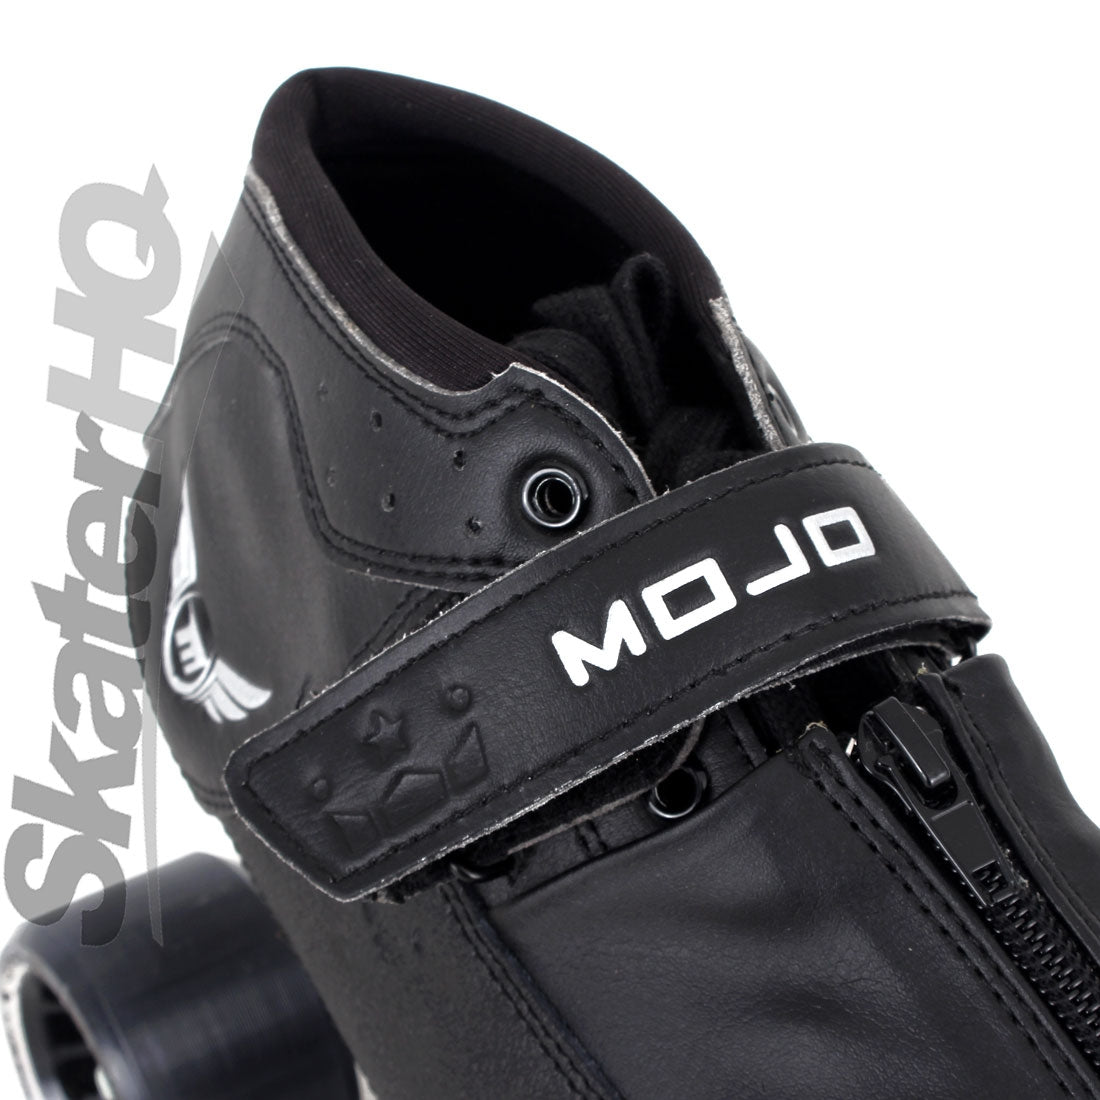 Mota Mojo Carbon Quad Skate 6US - Black Roller Skates